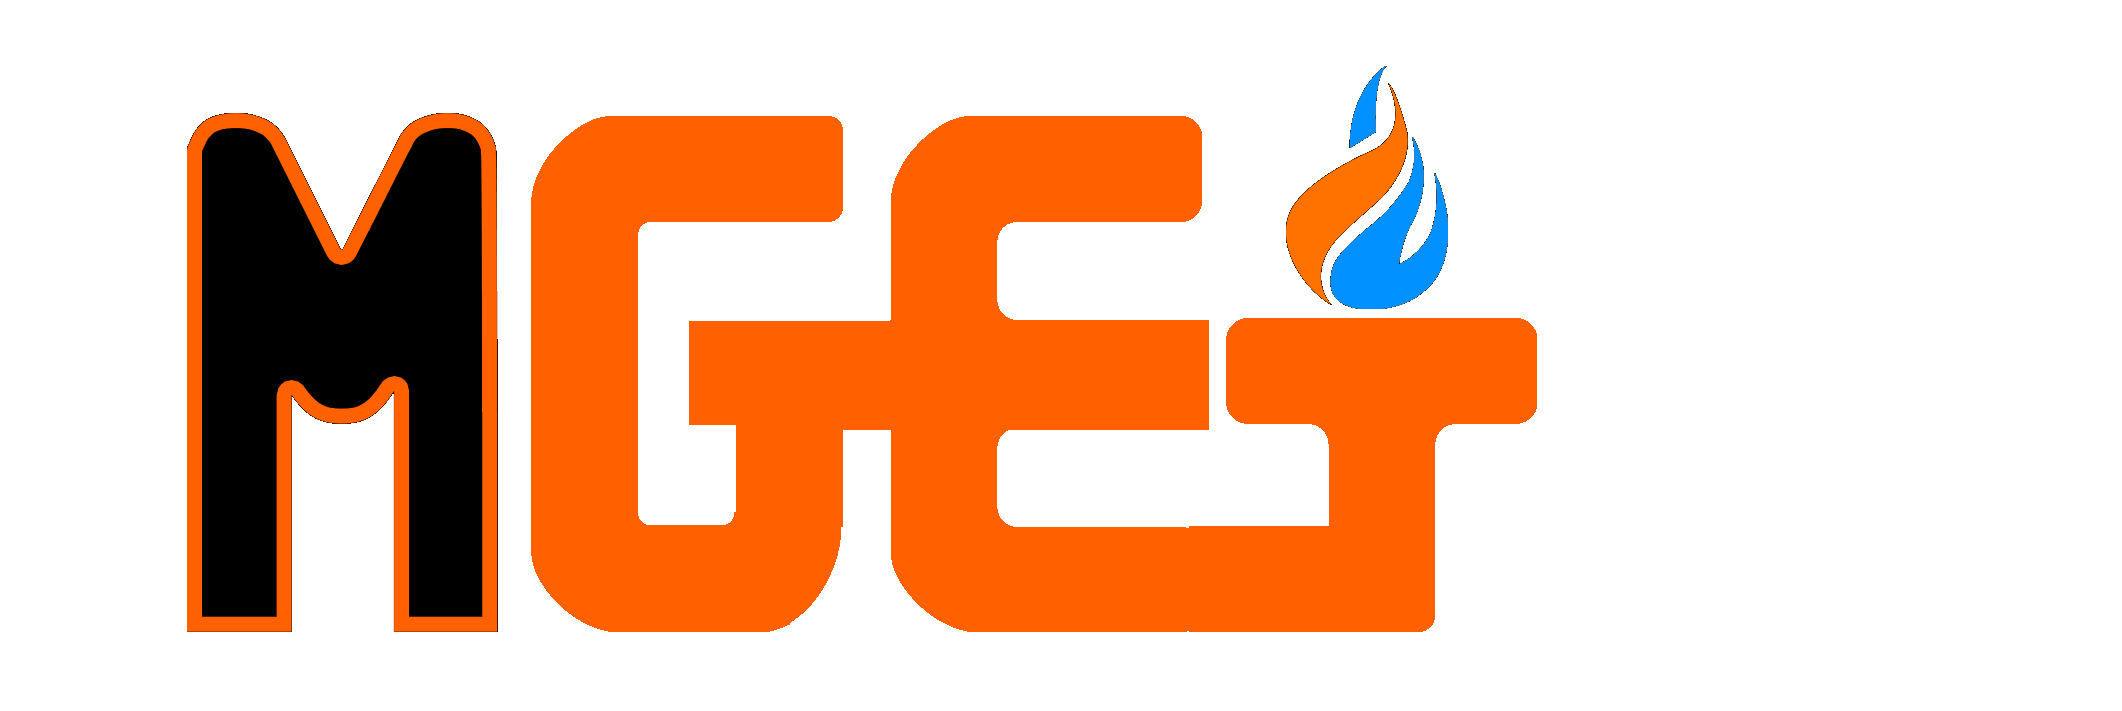 MGET Co GmbH Logo